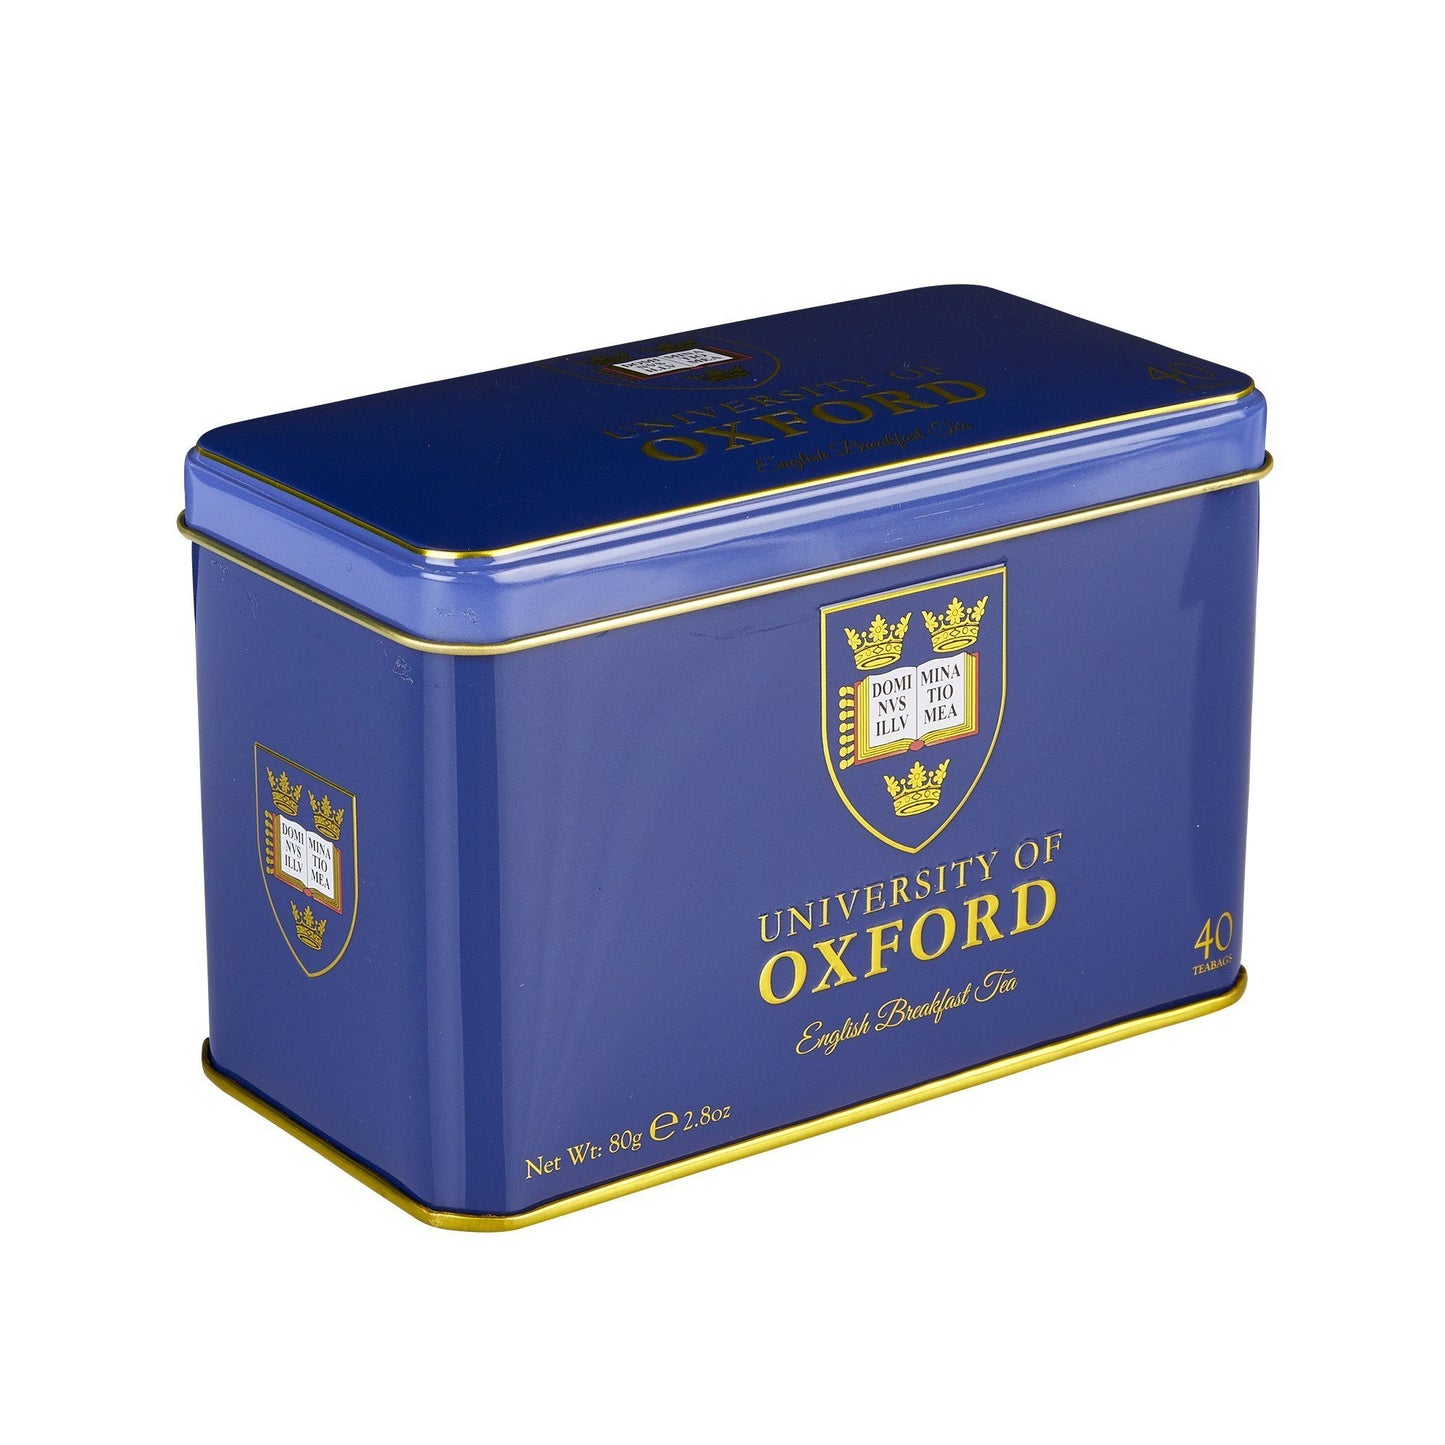 University Of Oxford English Breakfast Tea Tin 40 Teabags Black Tea New English Teas 